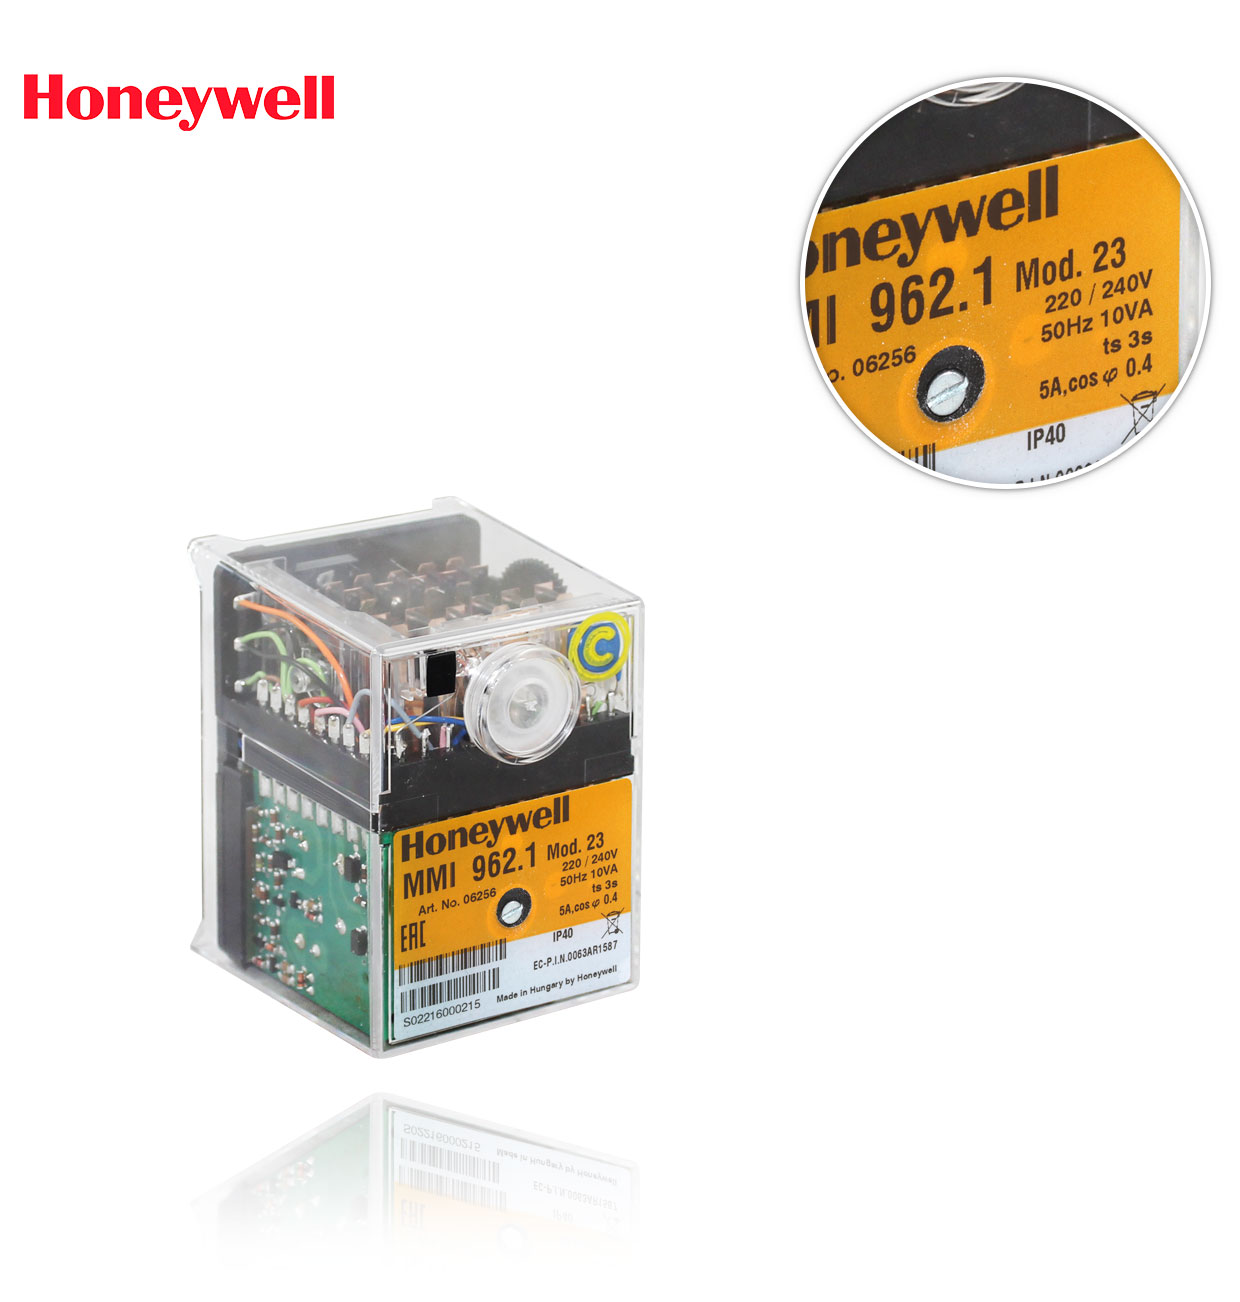 MMI 962.1 (Mod.23) SATRONIC/ HONEYWELL CONTROL BOX